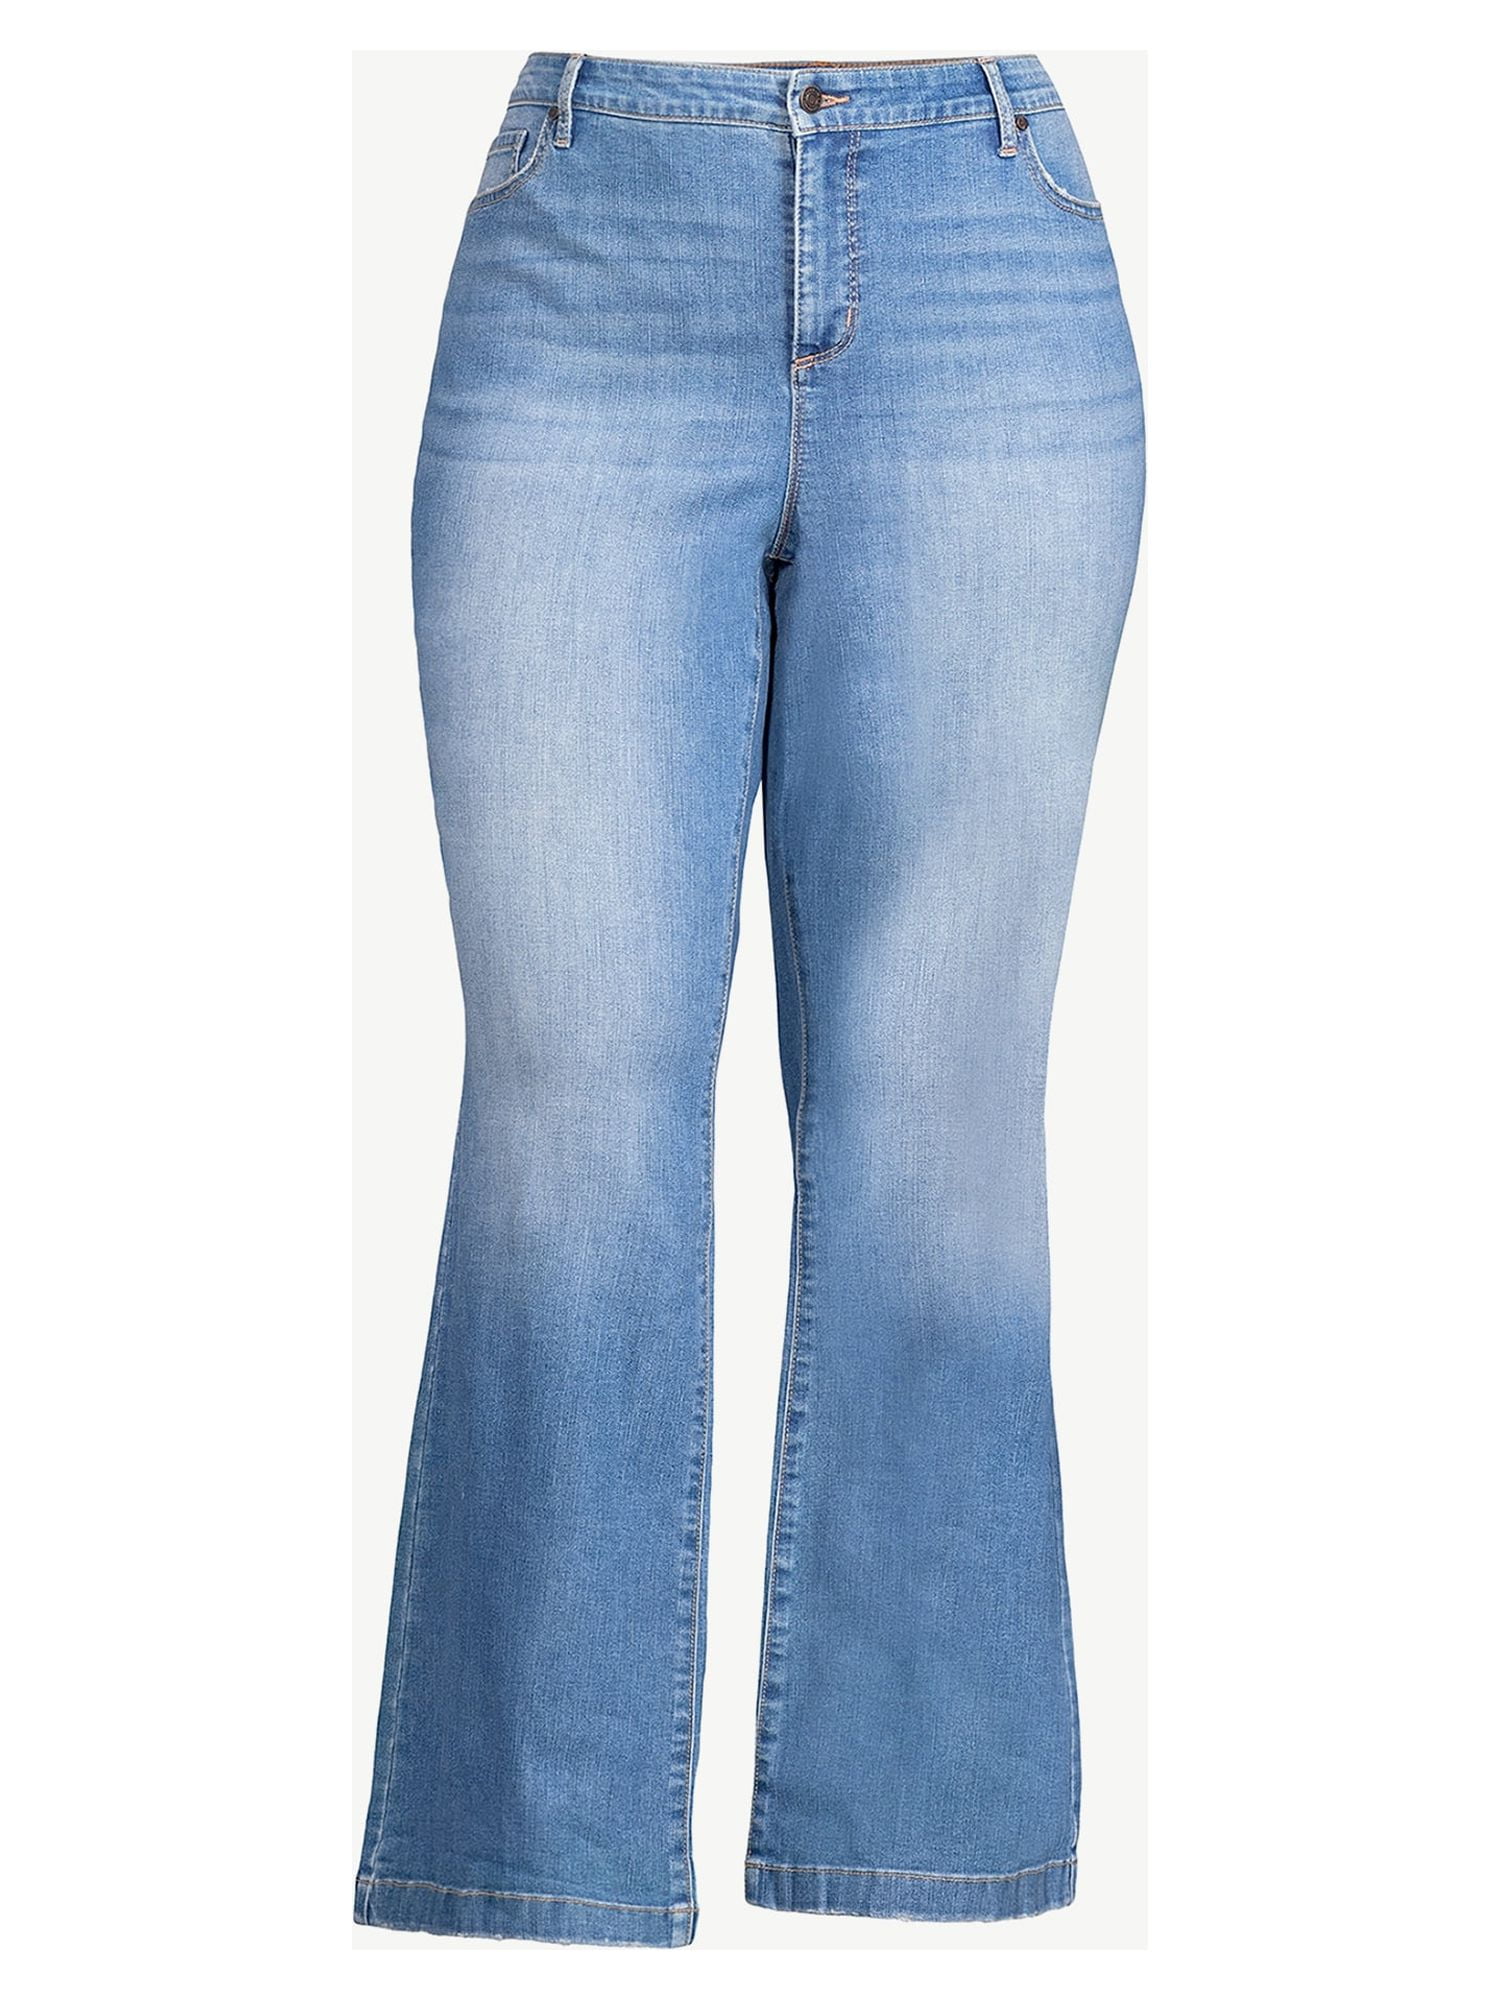 Sofia Jeans by Sofia Vergara Melisa High Rise Flare, Size 8 Short, Denim  Blue - Helia Beer Co